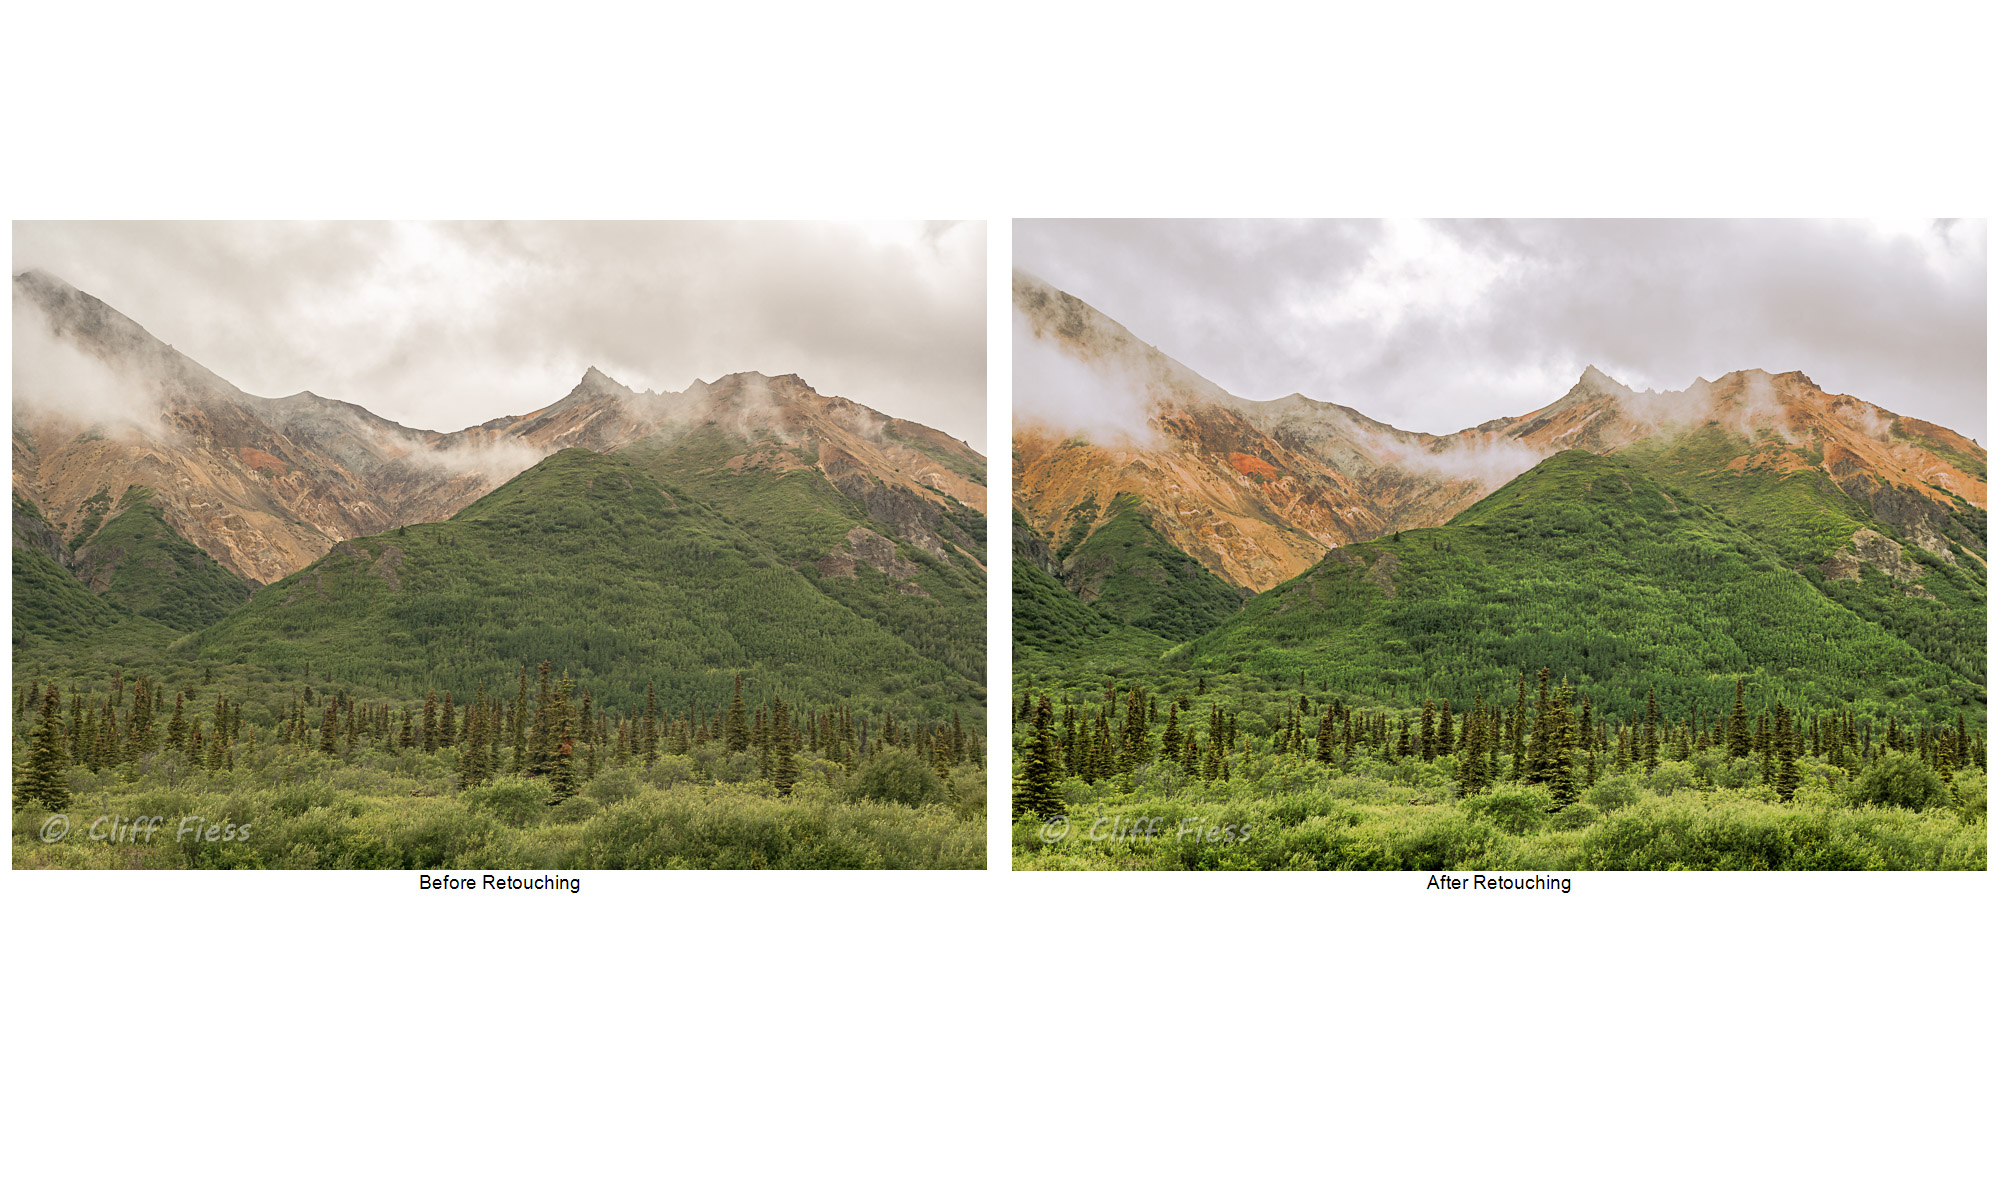 Alaskan Landscape.jpg